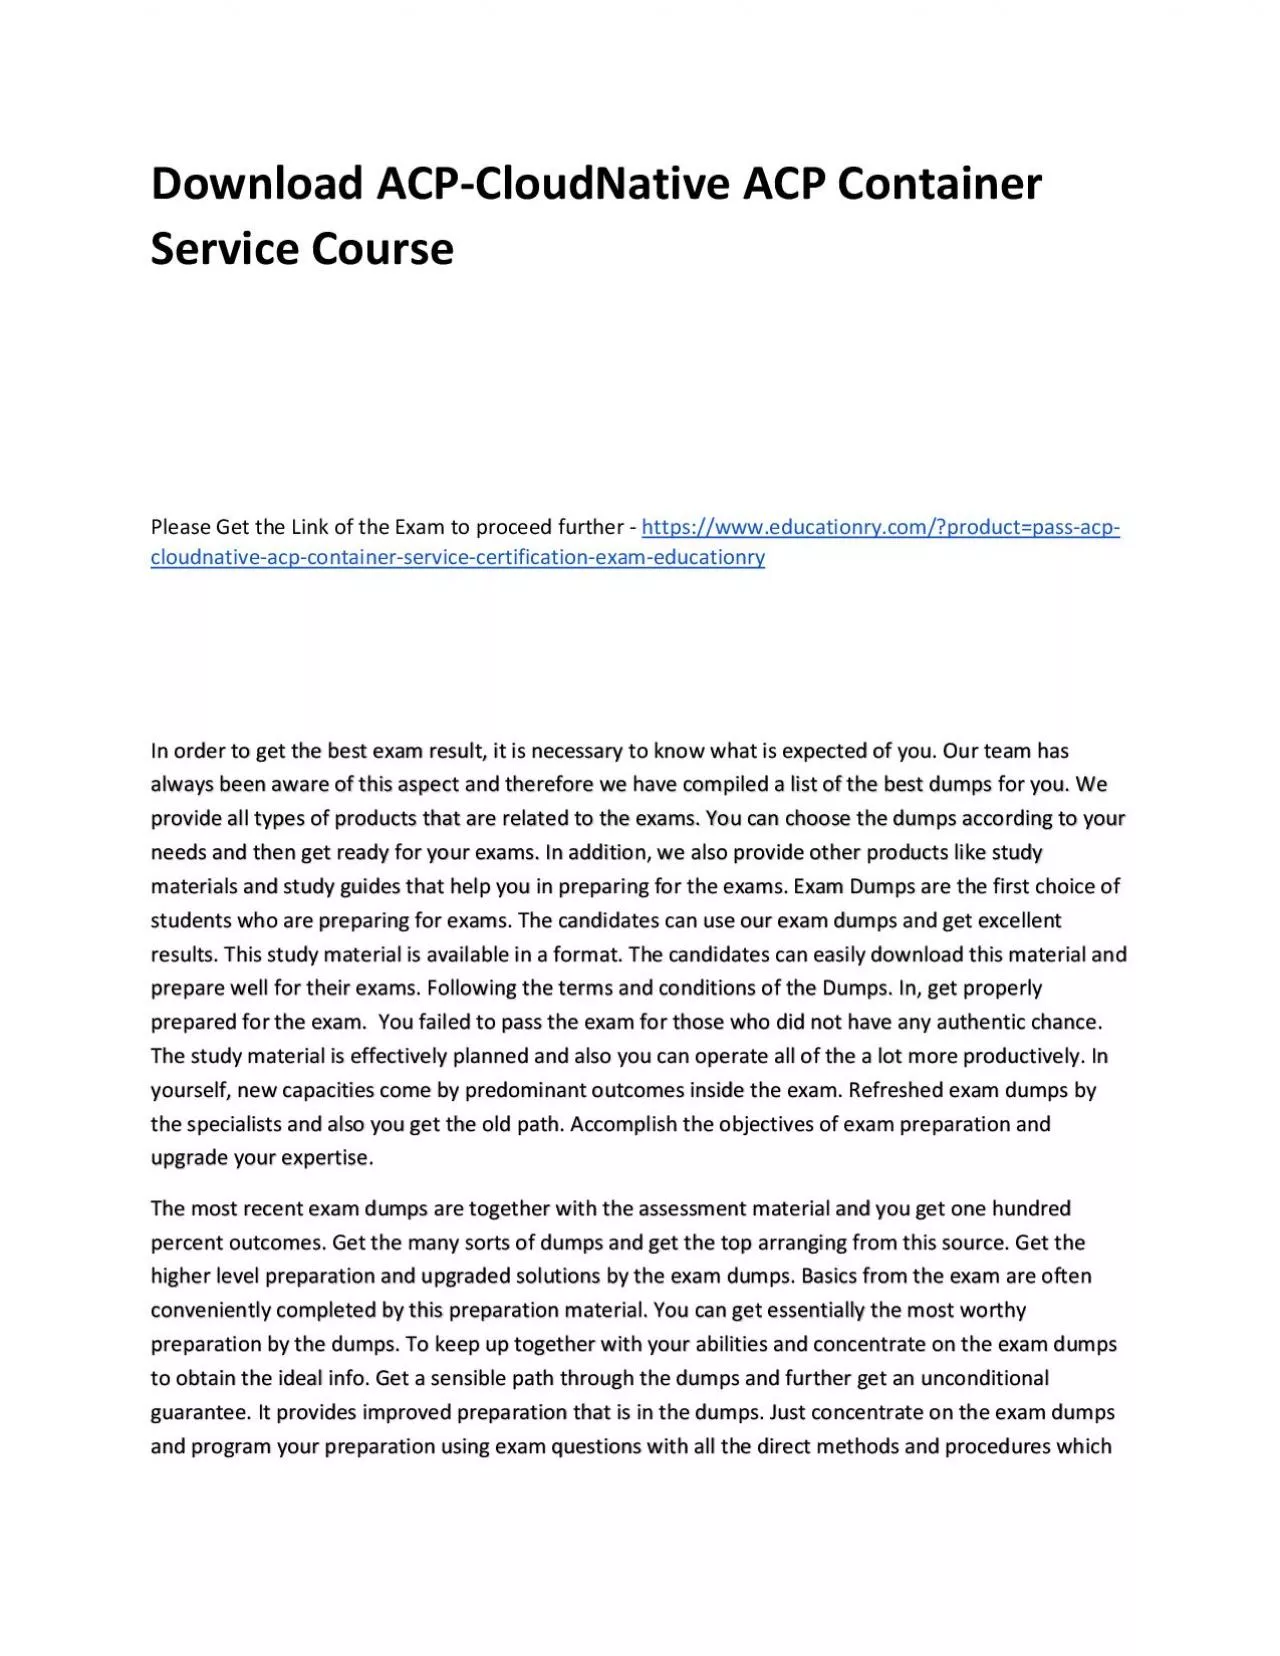 Download ACP-CloudNative ACP Container Service Practice Course